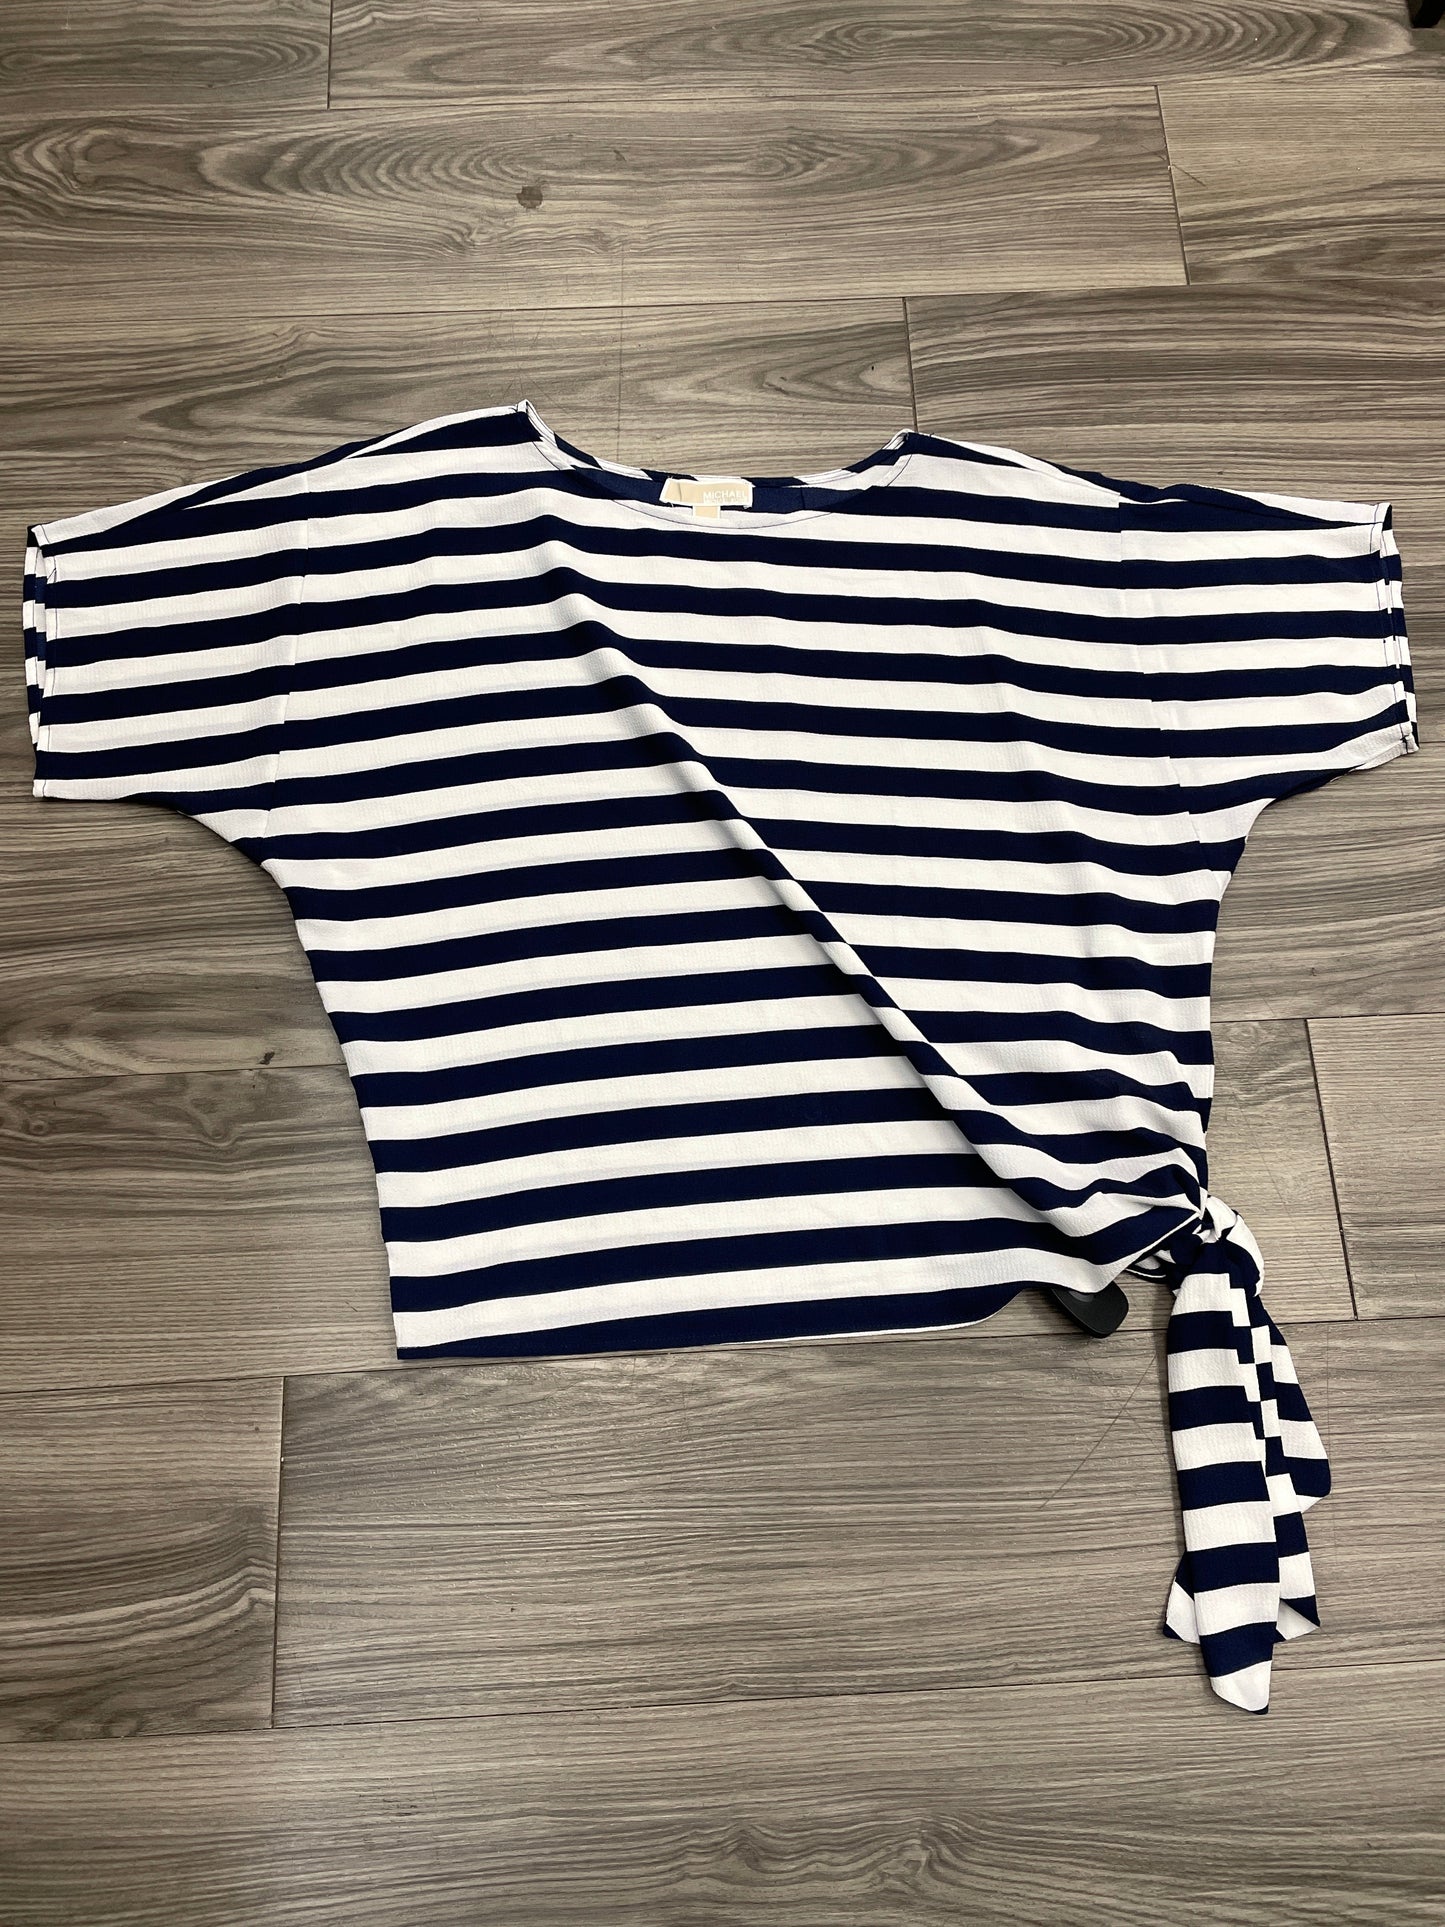 Striped Pattern Top Short Sleeve Designer Michael Kors, Size M